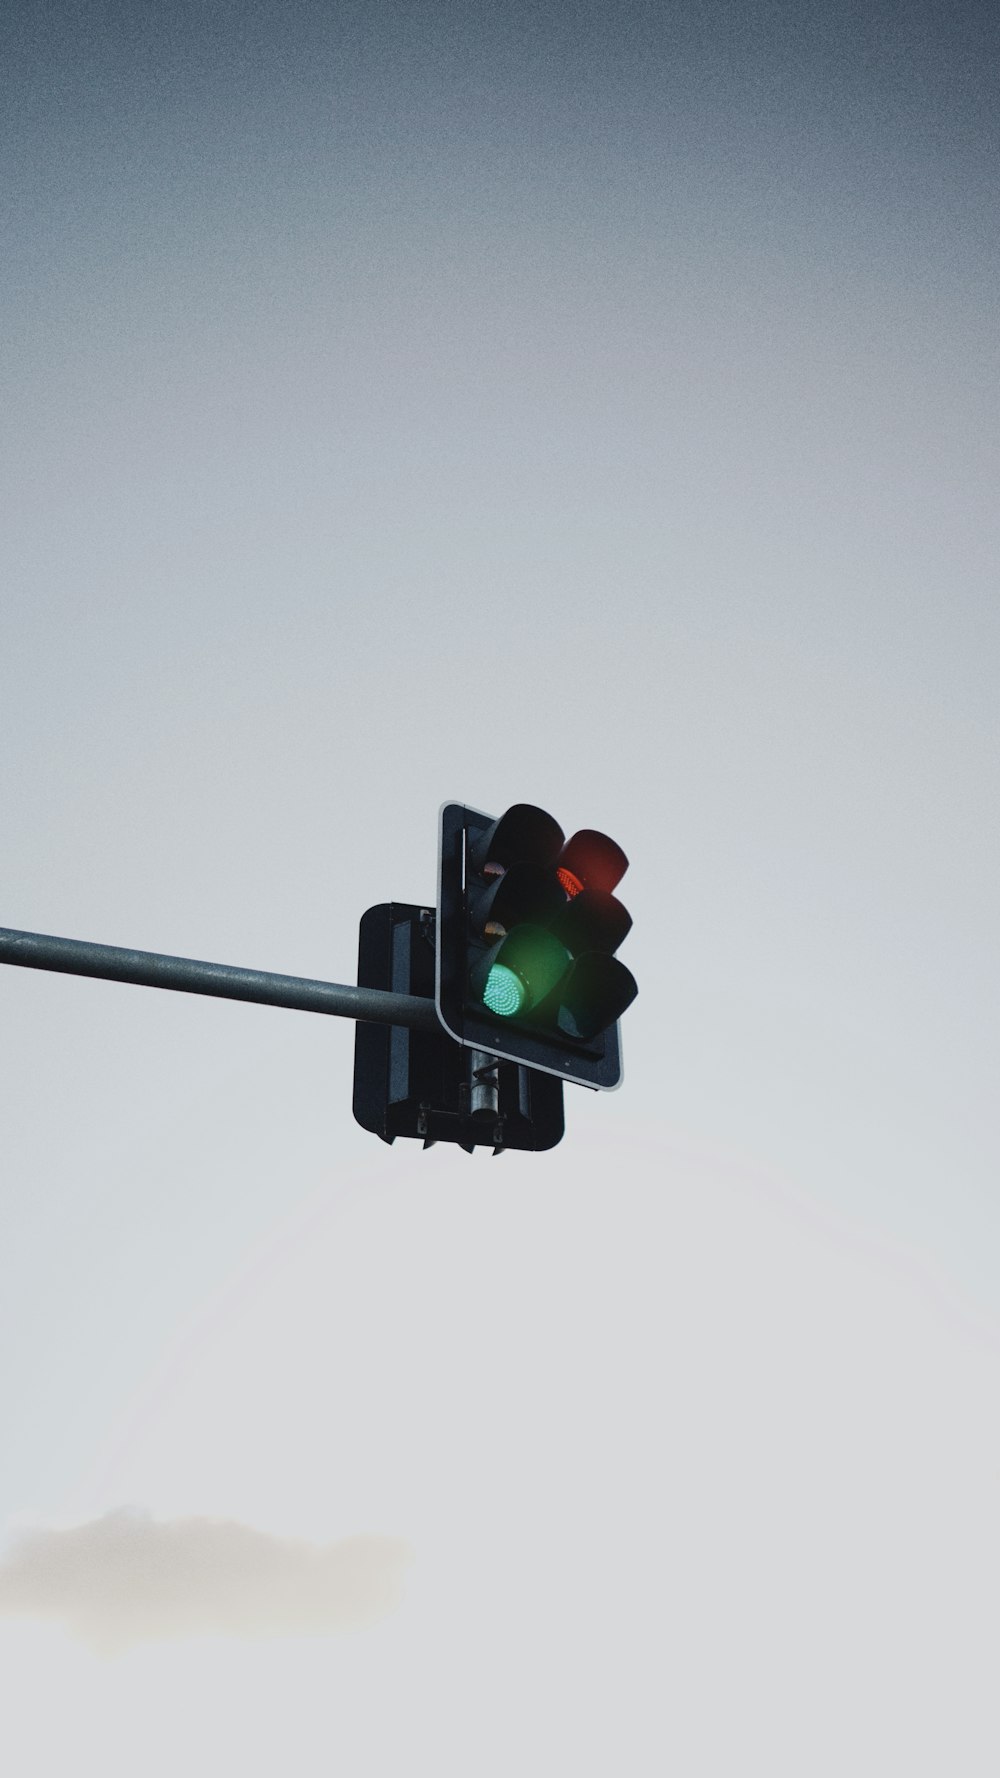 traffic light with green light